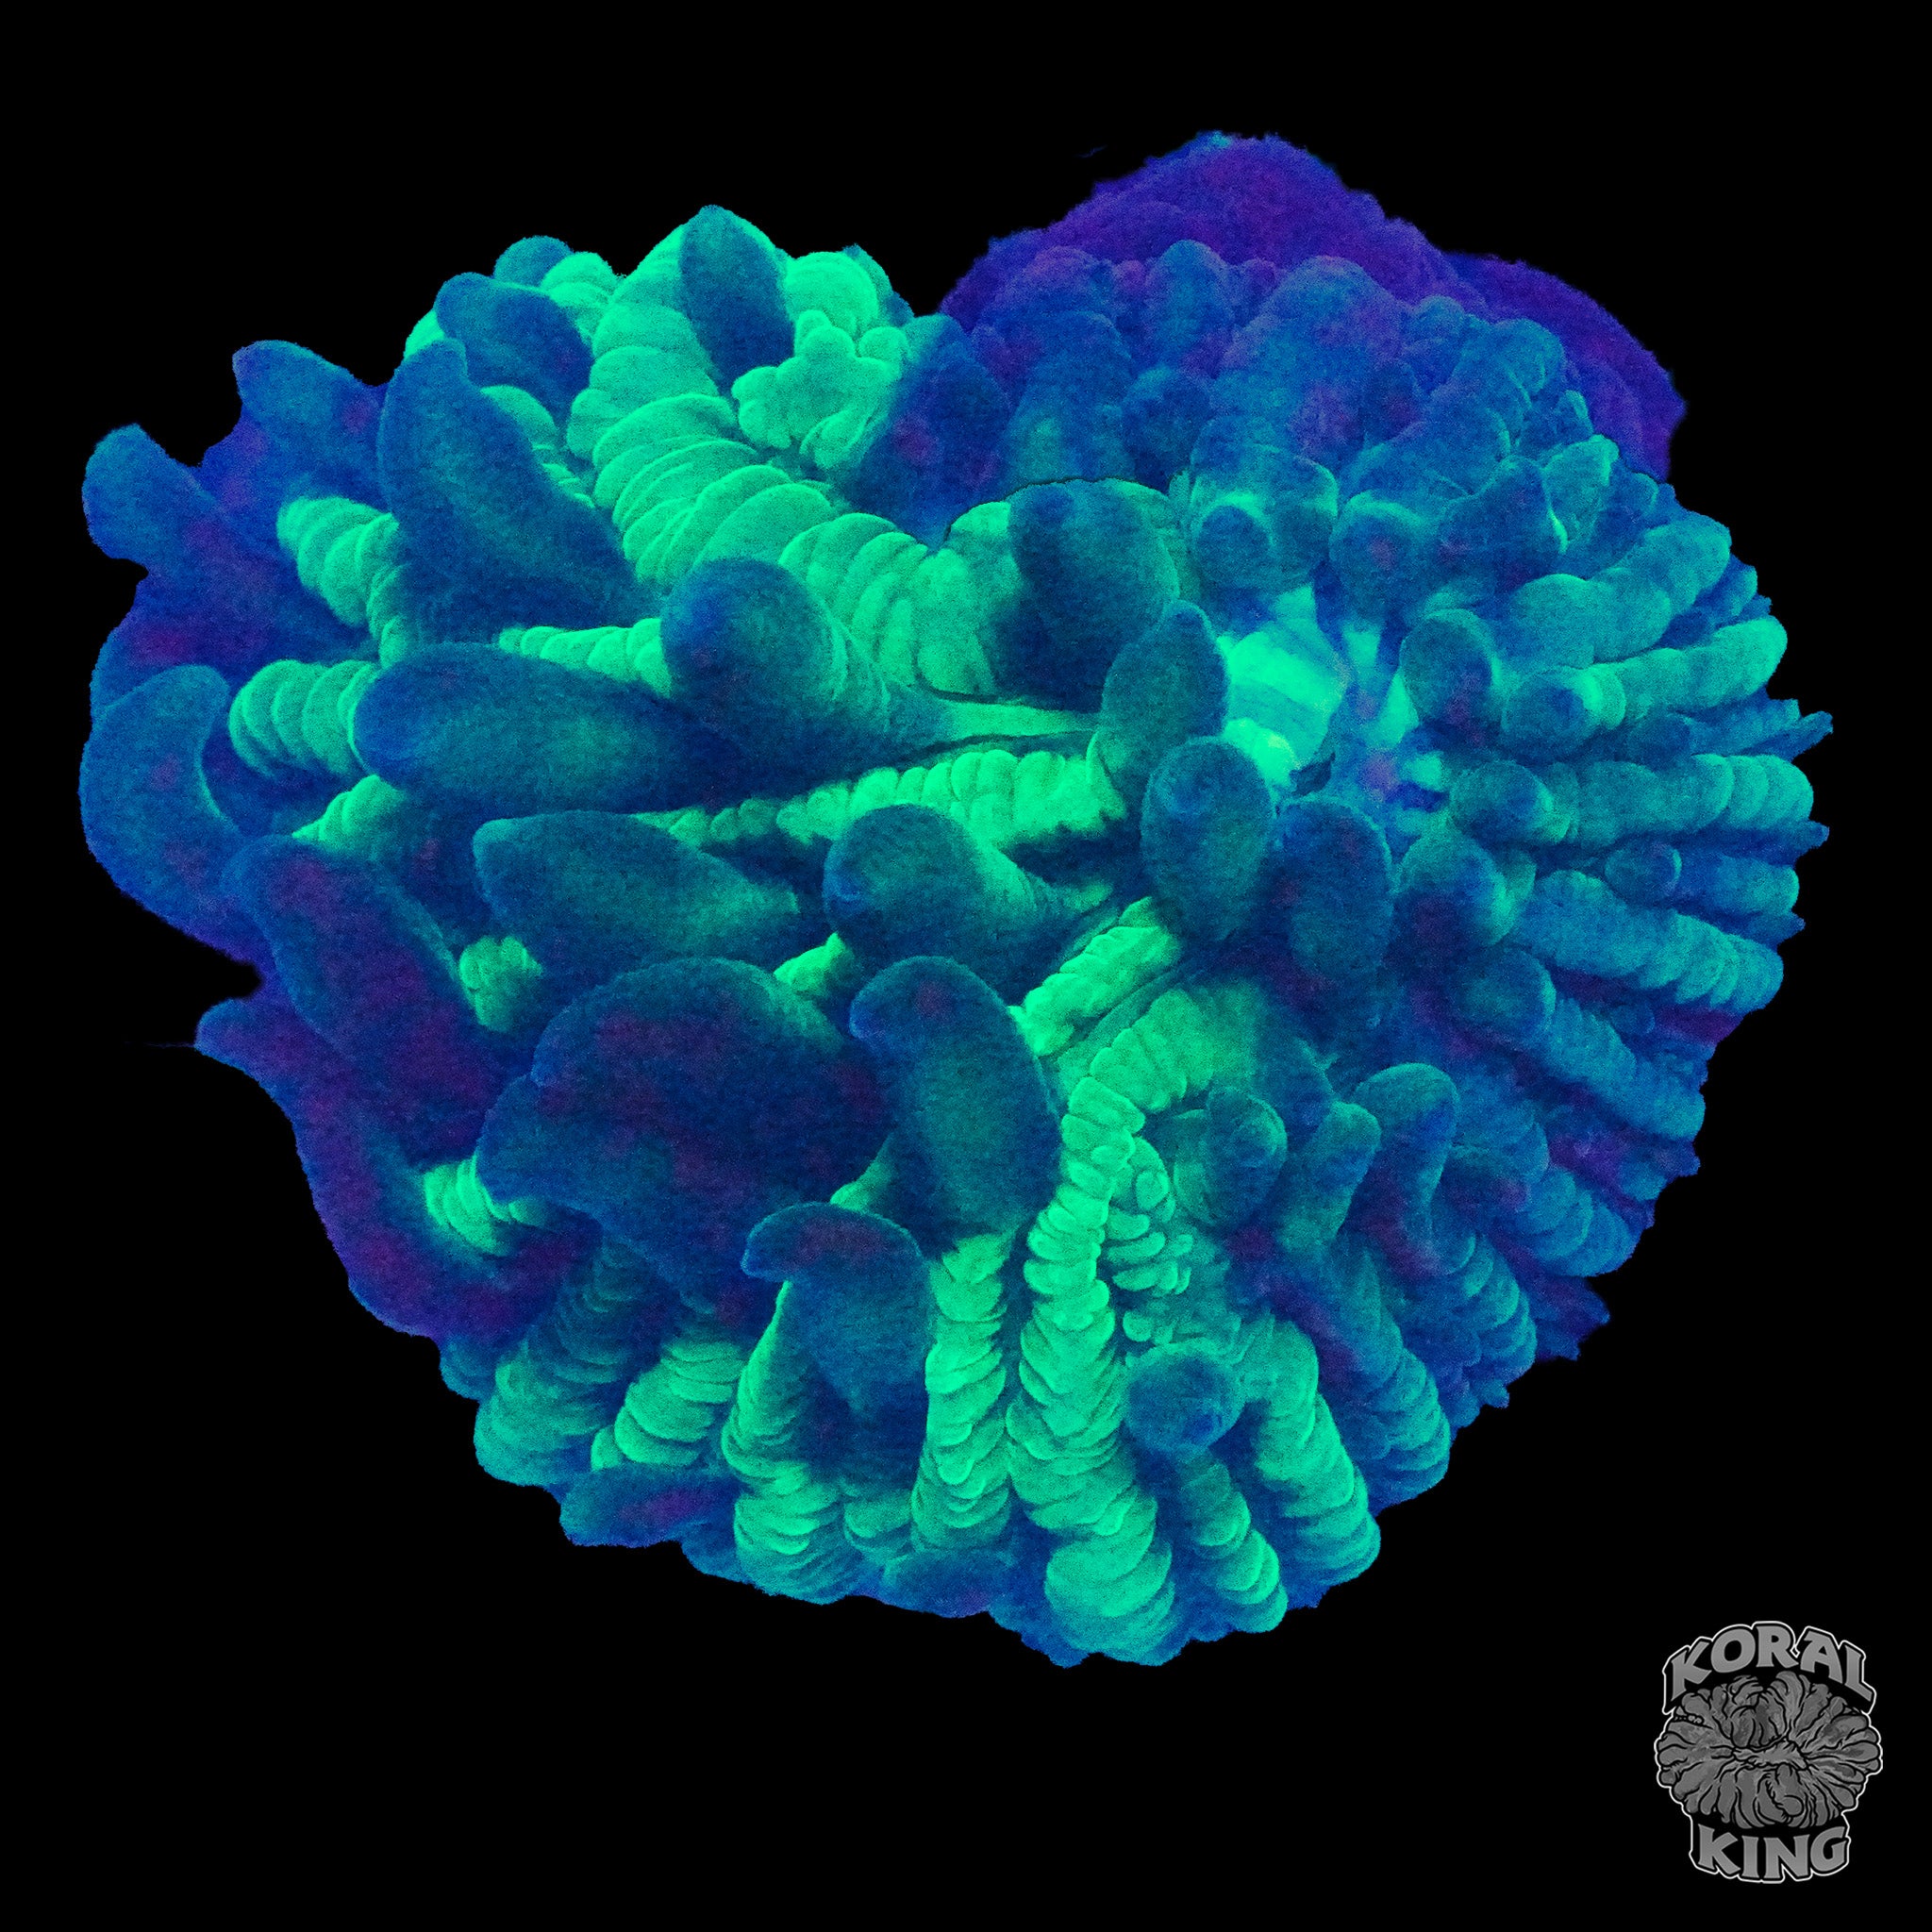 Corals – Koral King